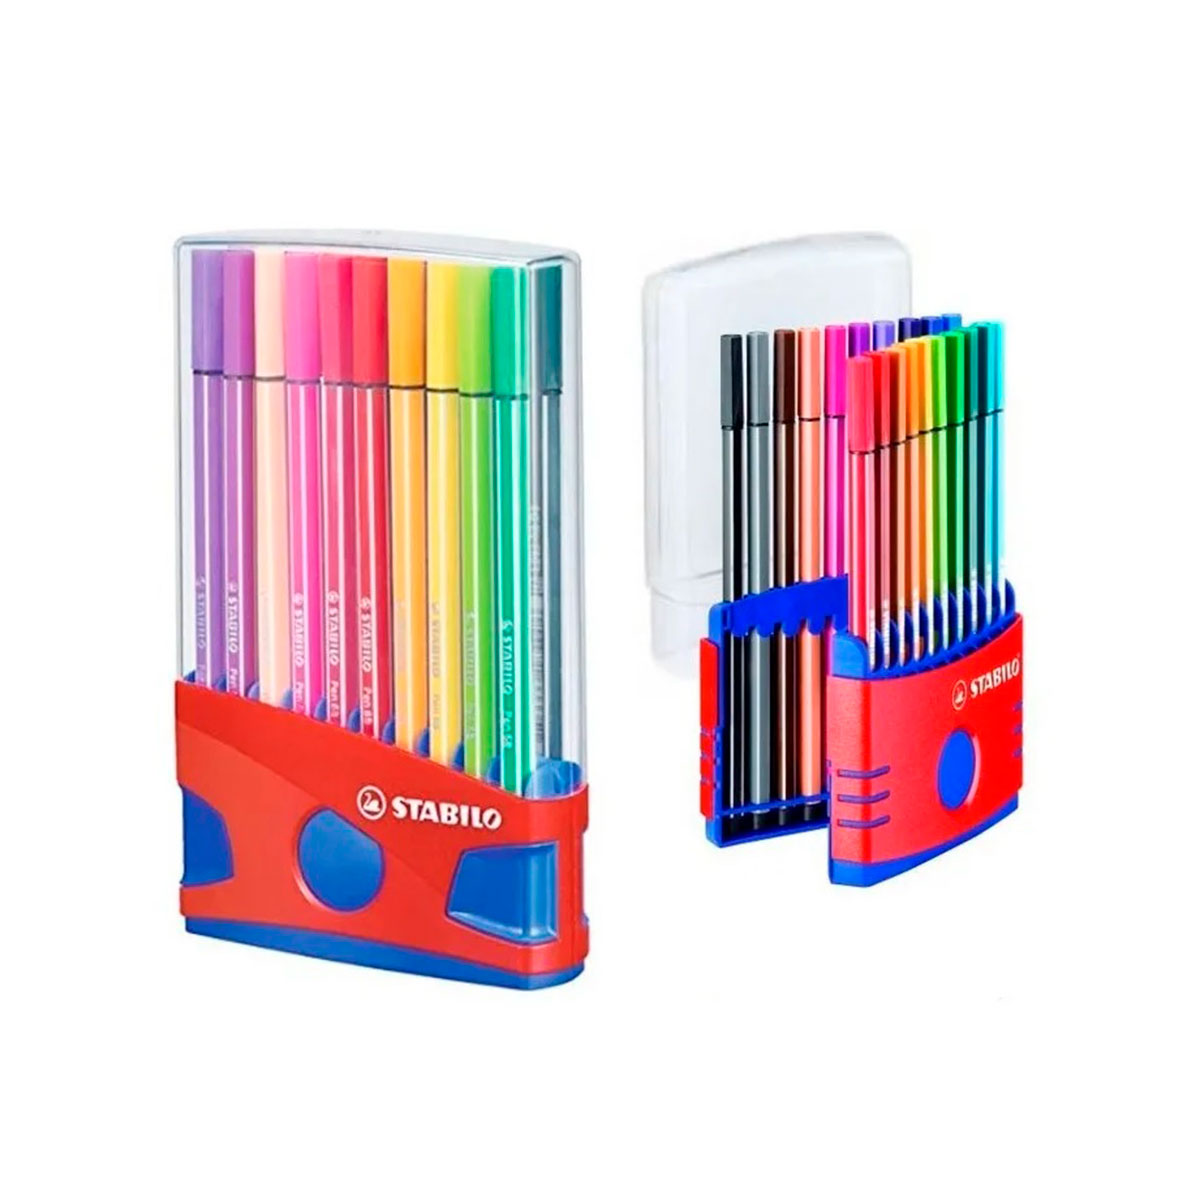 Stabilo Pen 68 Color Parade Marker Set